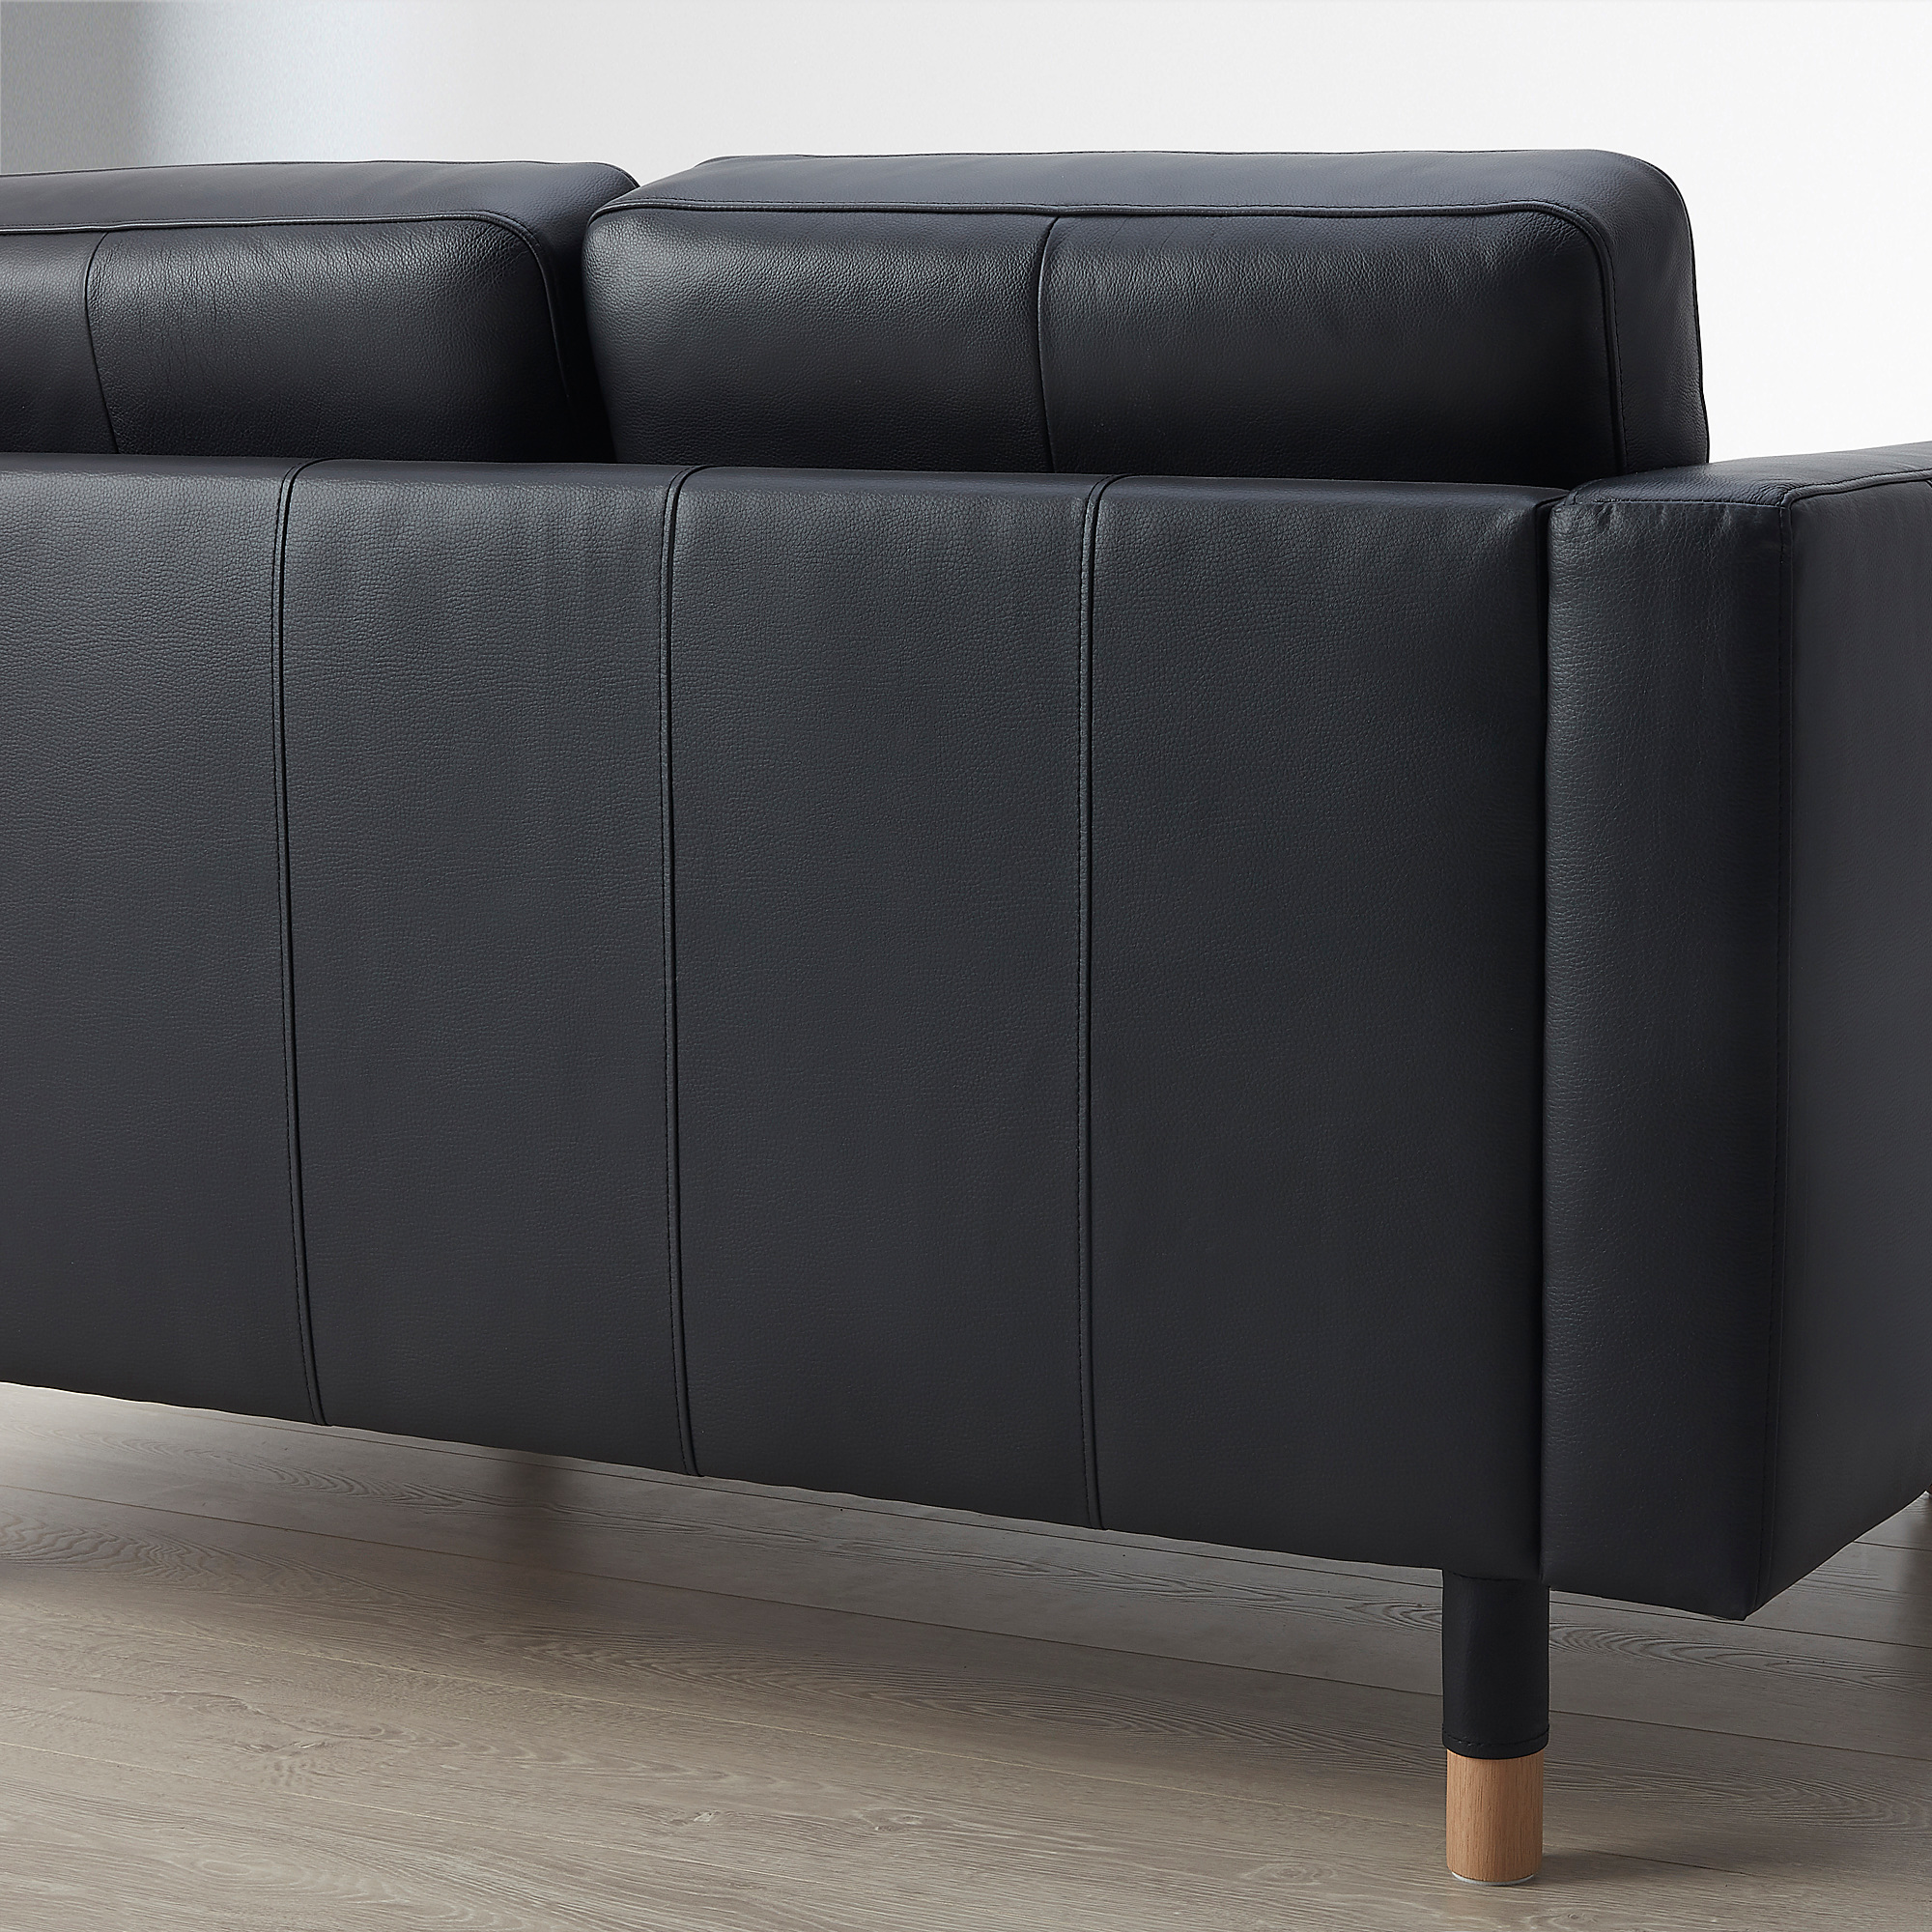 LANDSKRONA compact 2-seat sofa